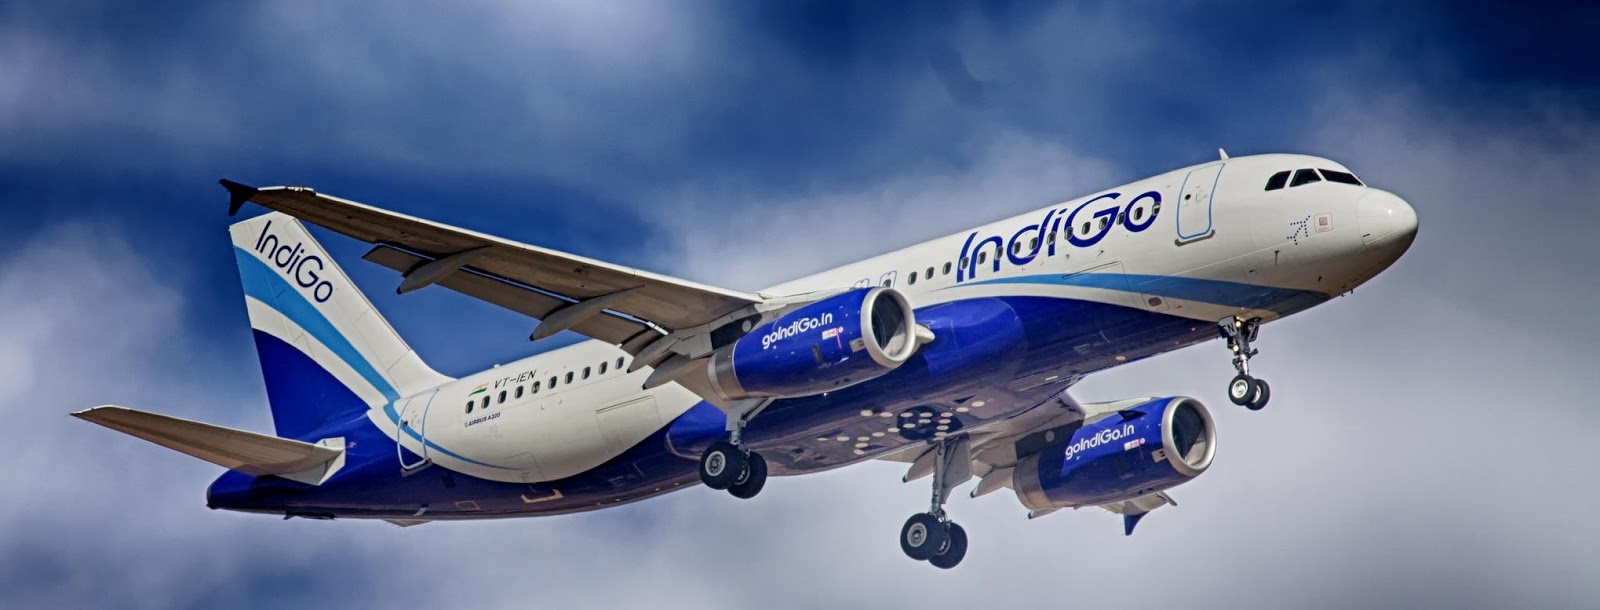 A journey through Divinity Interglobe Aviation (IndiGo